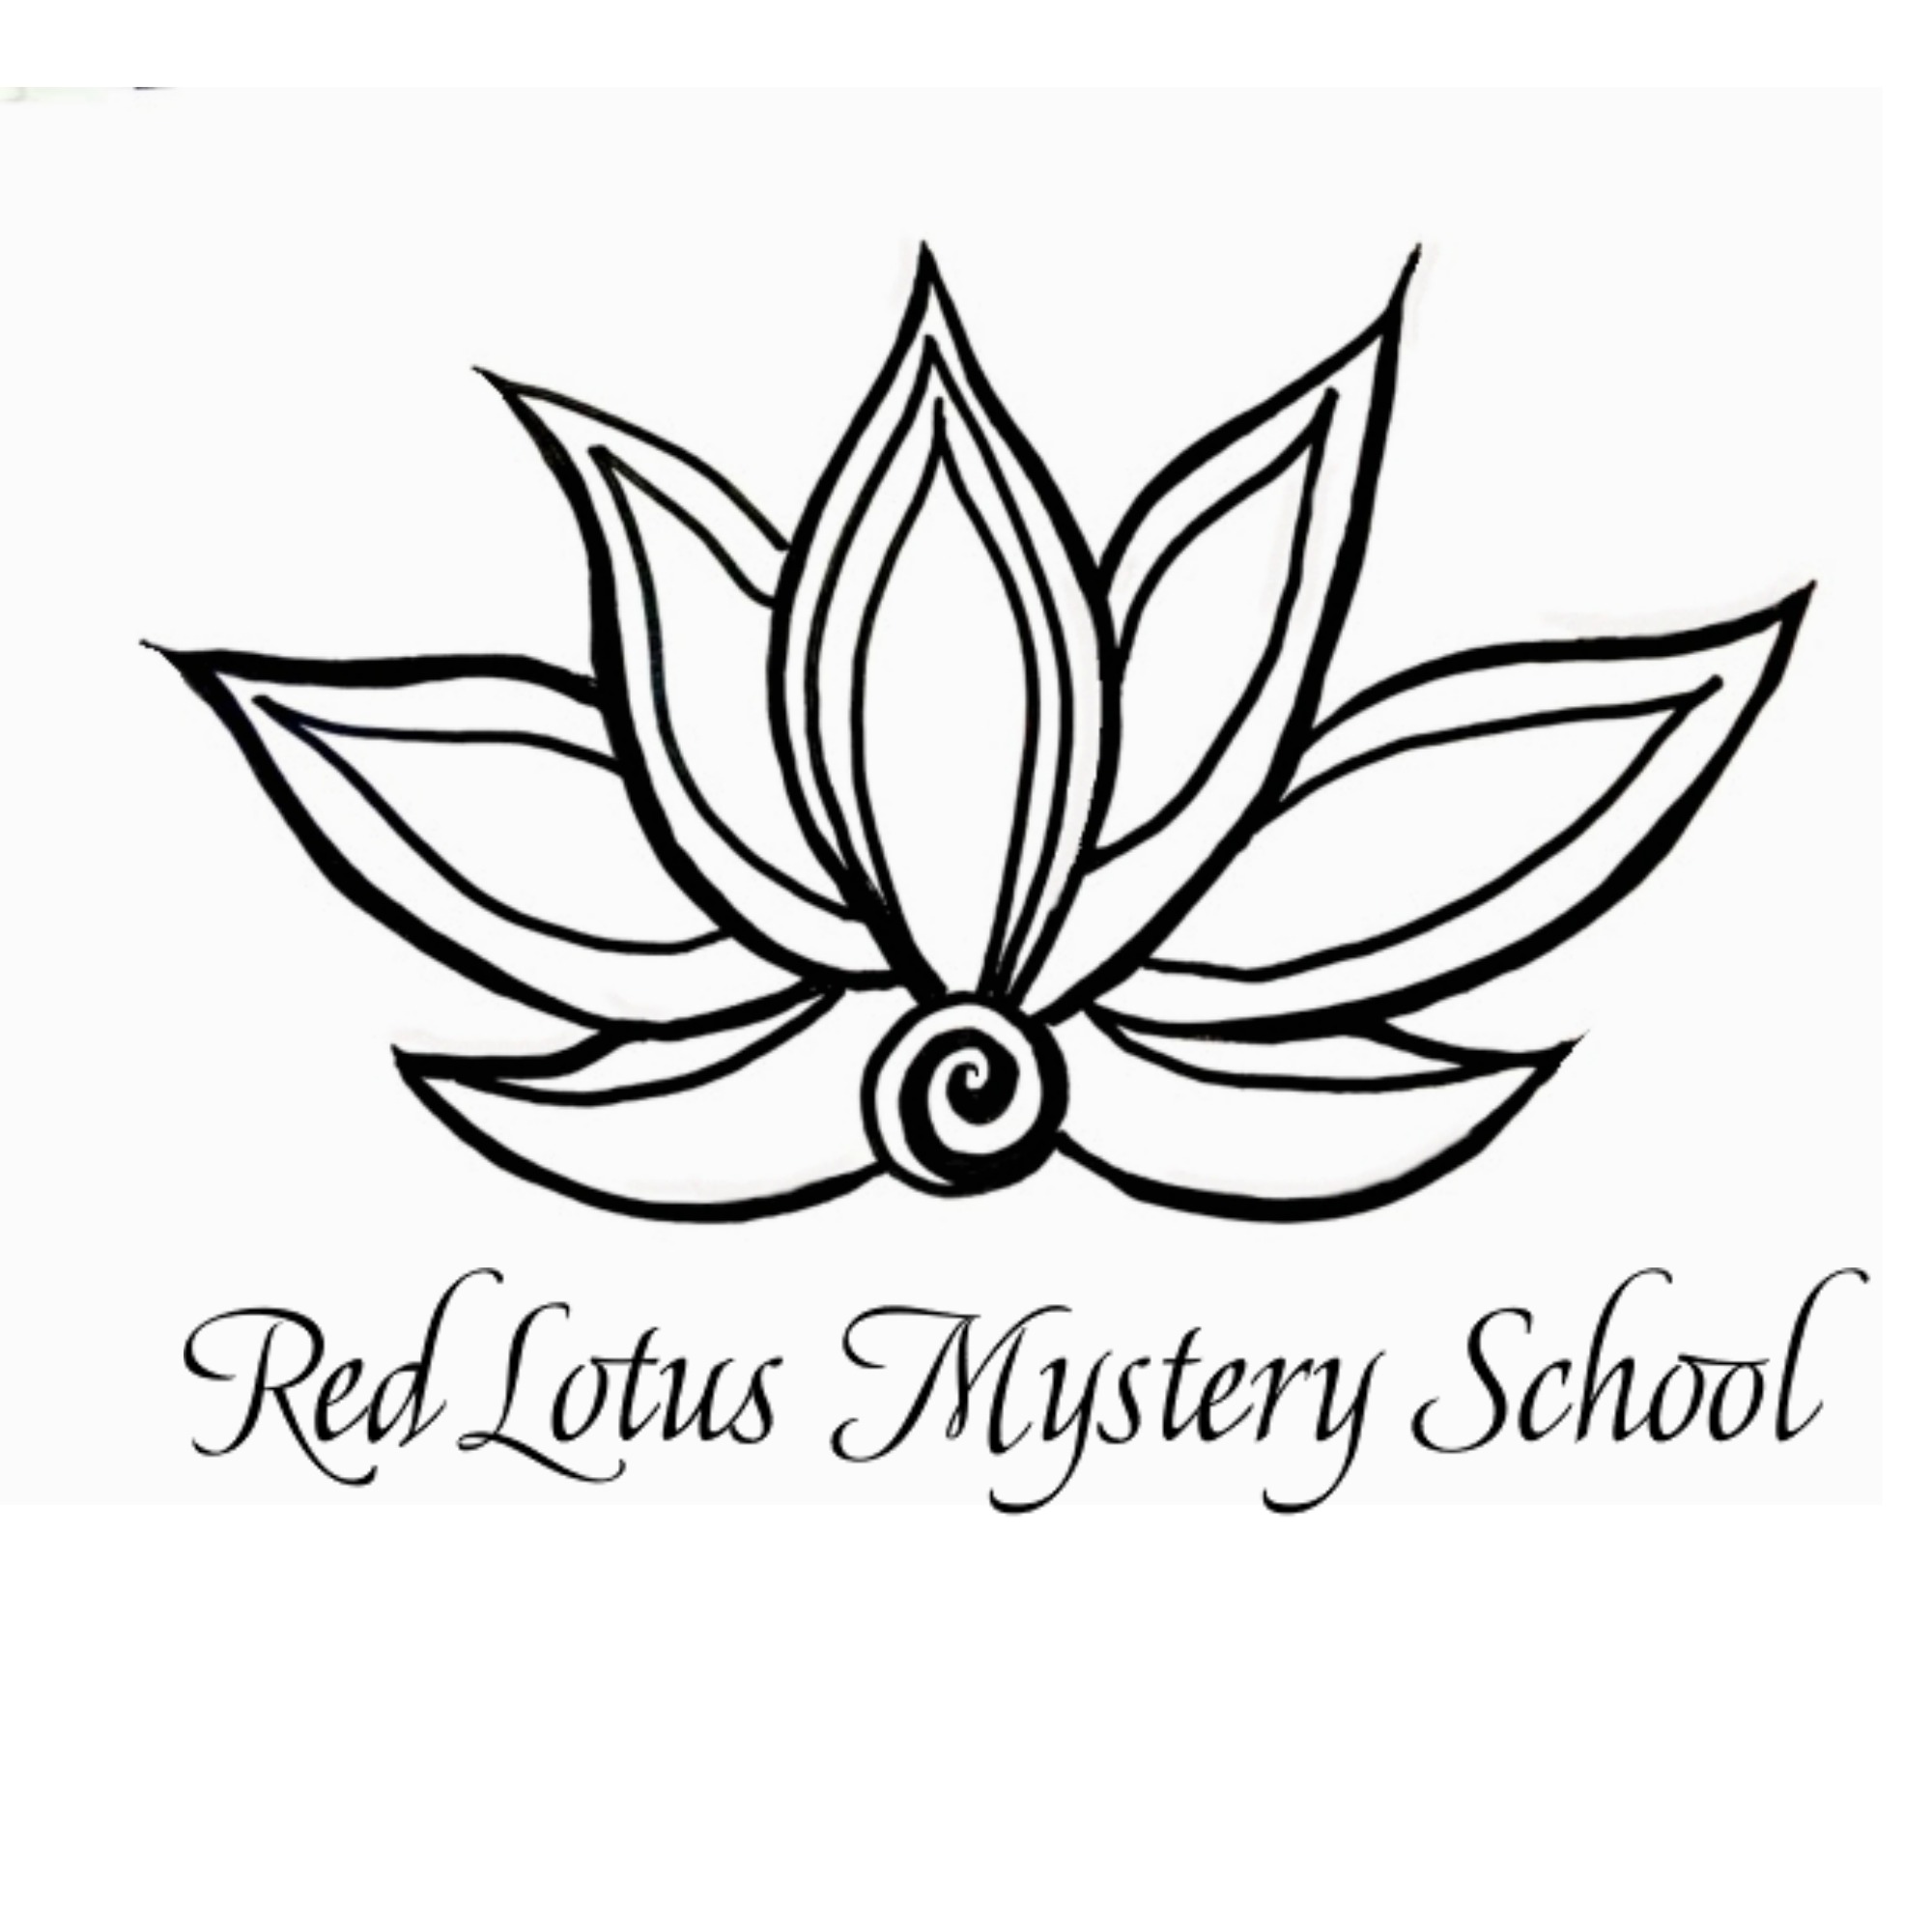 Red Lotus Mystery School